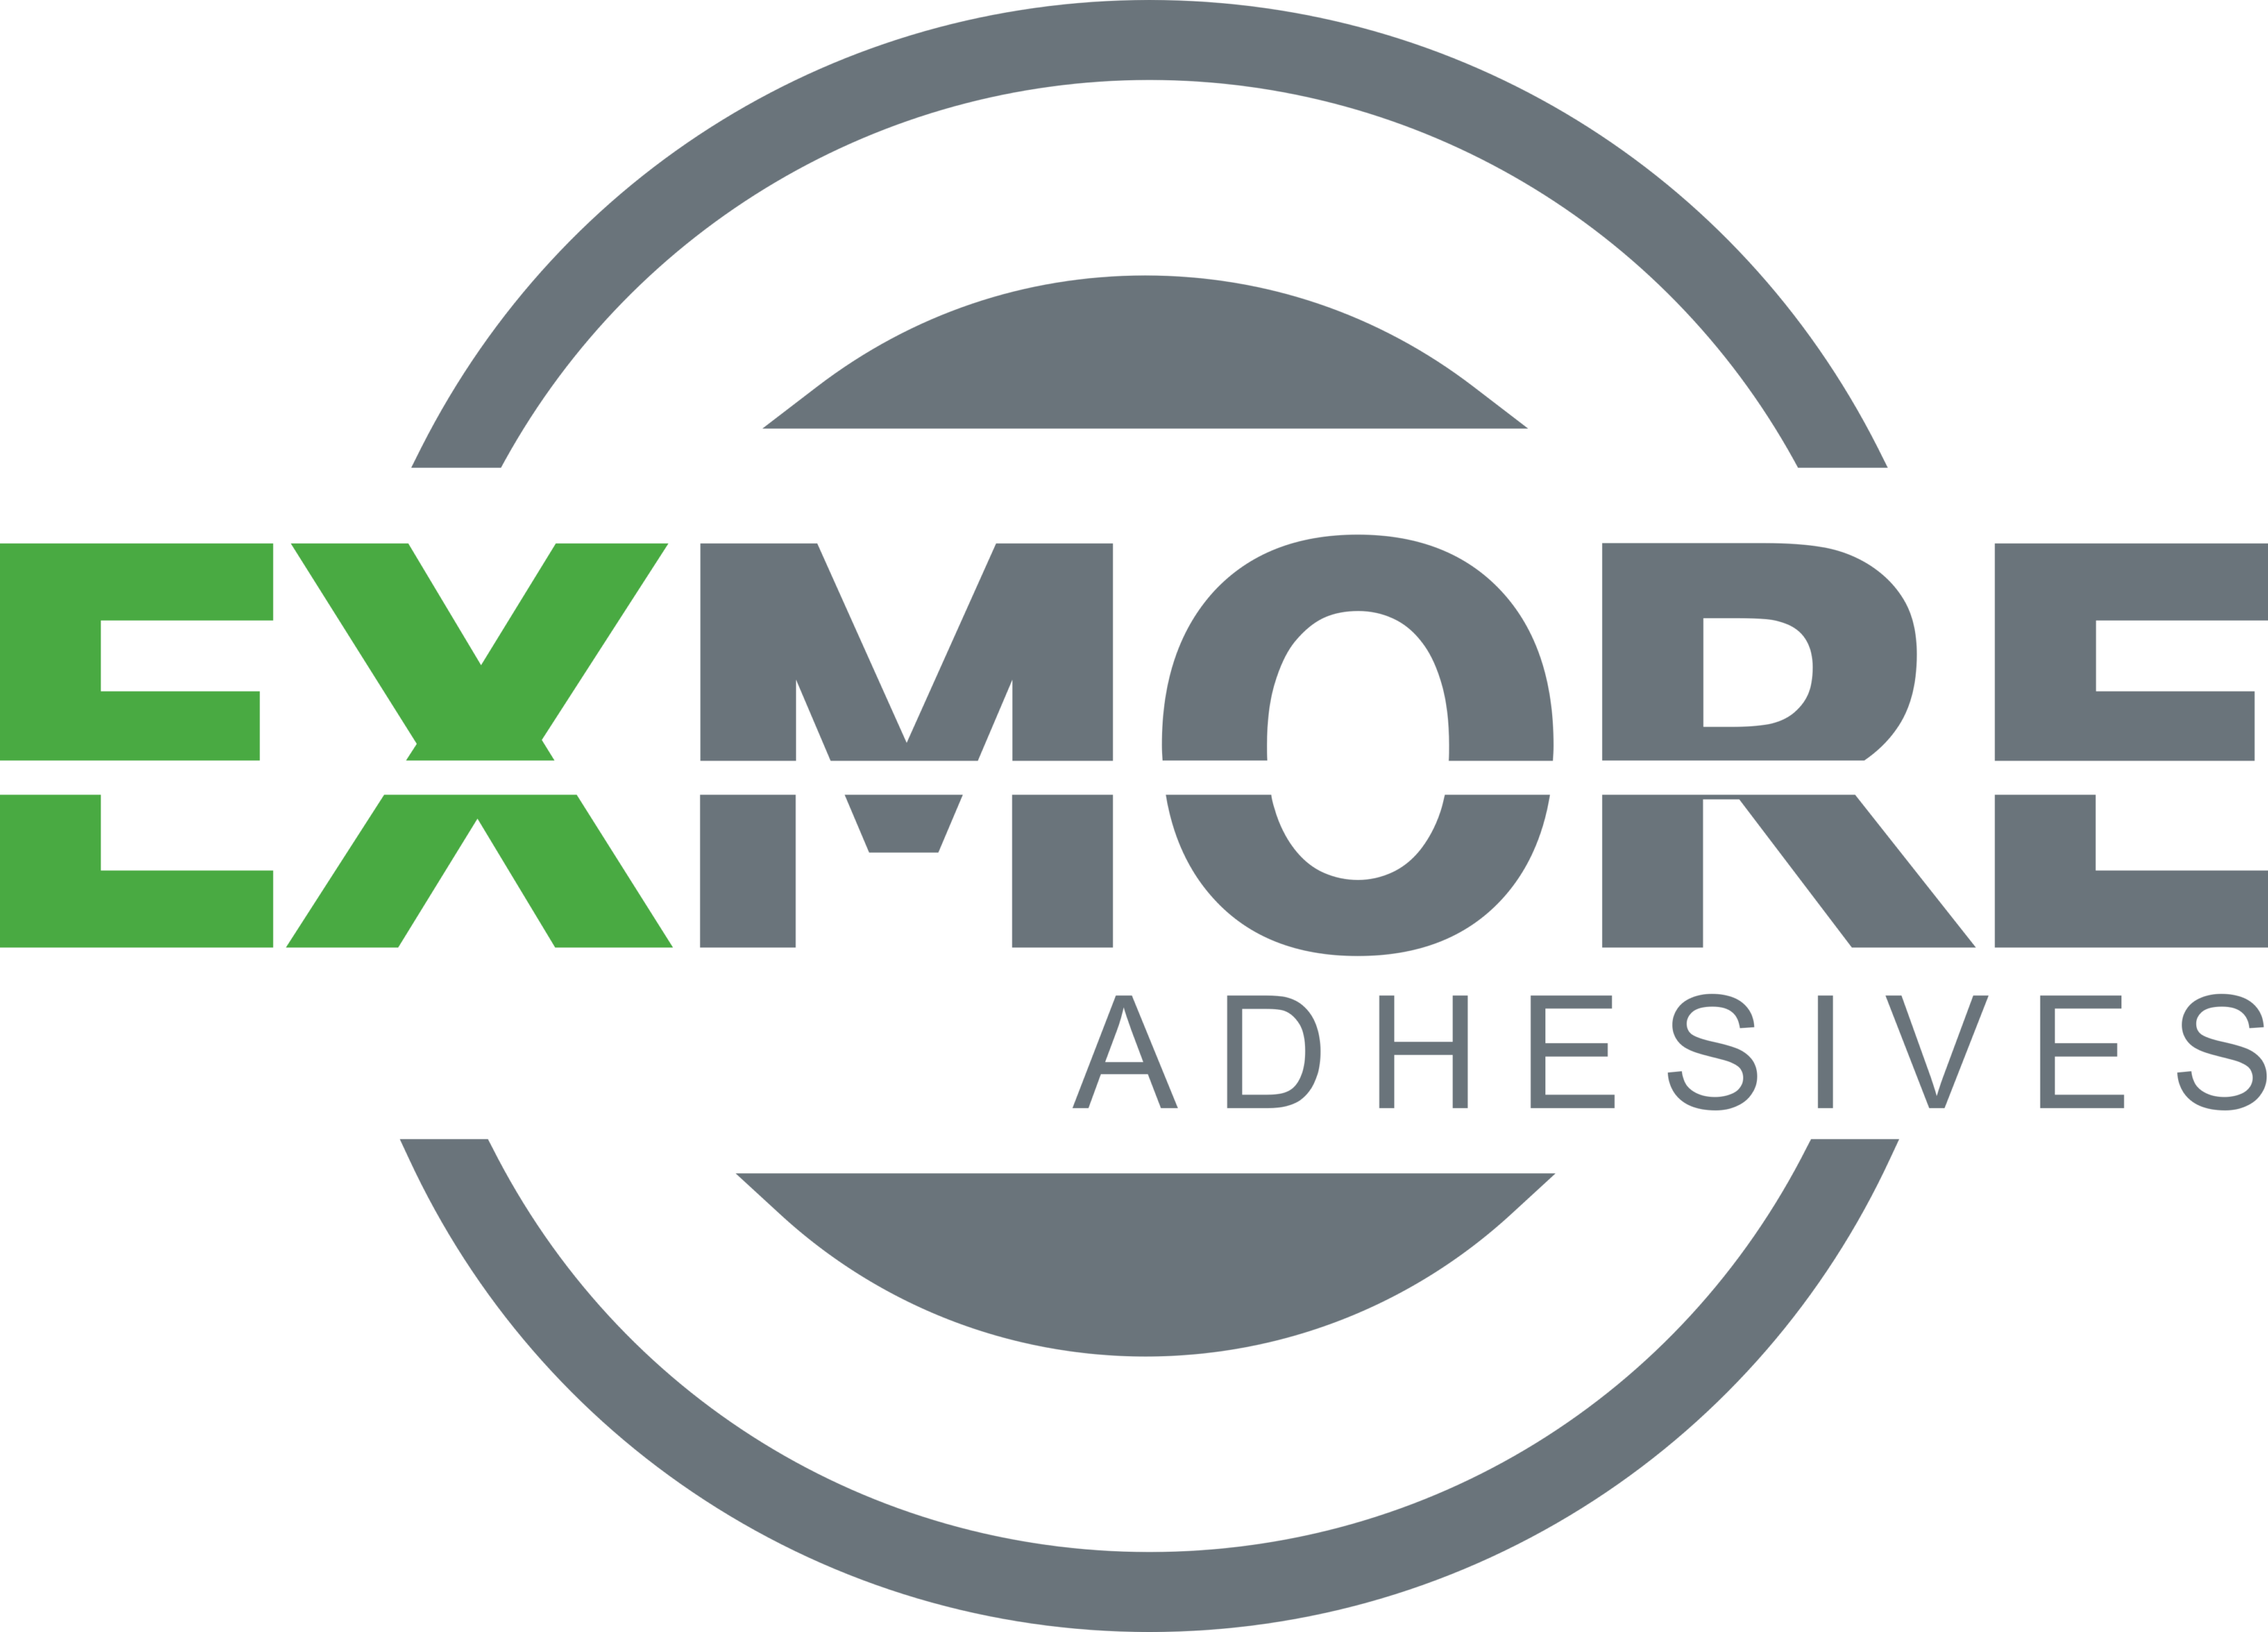 EXMORE Adhesives Logo